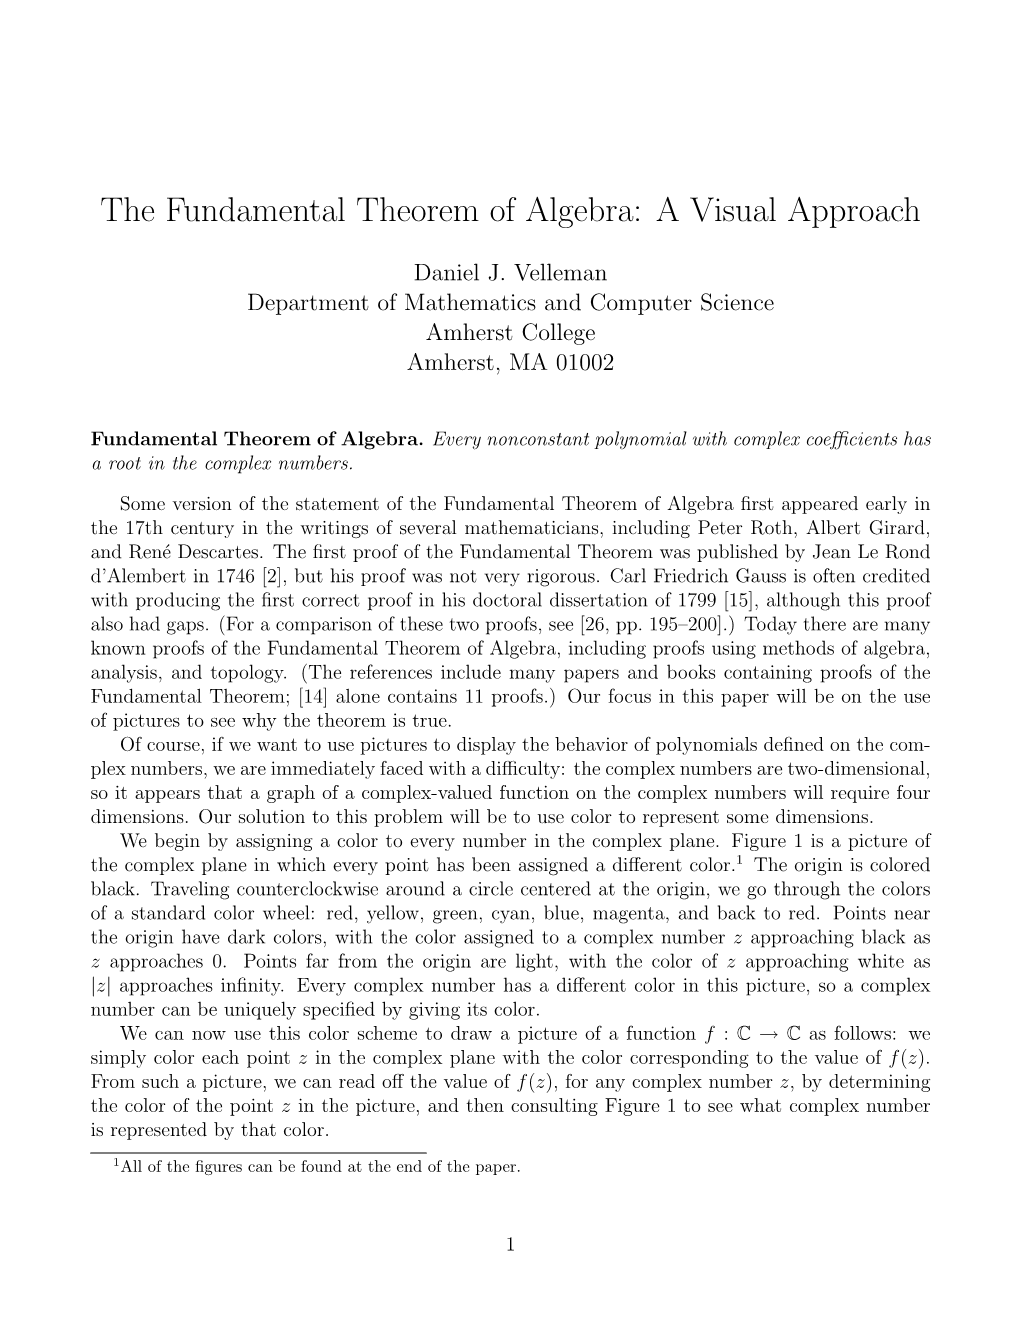 The Fundamental Theorem of Algebra: a Visual Approach